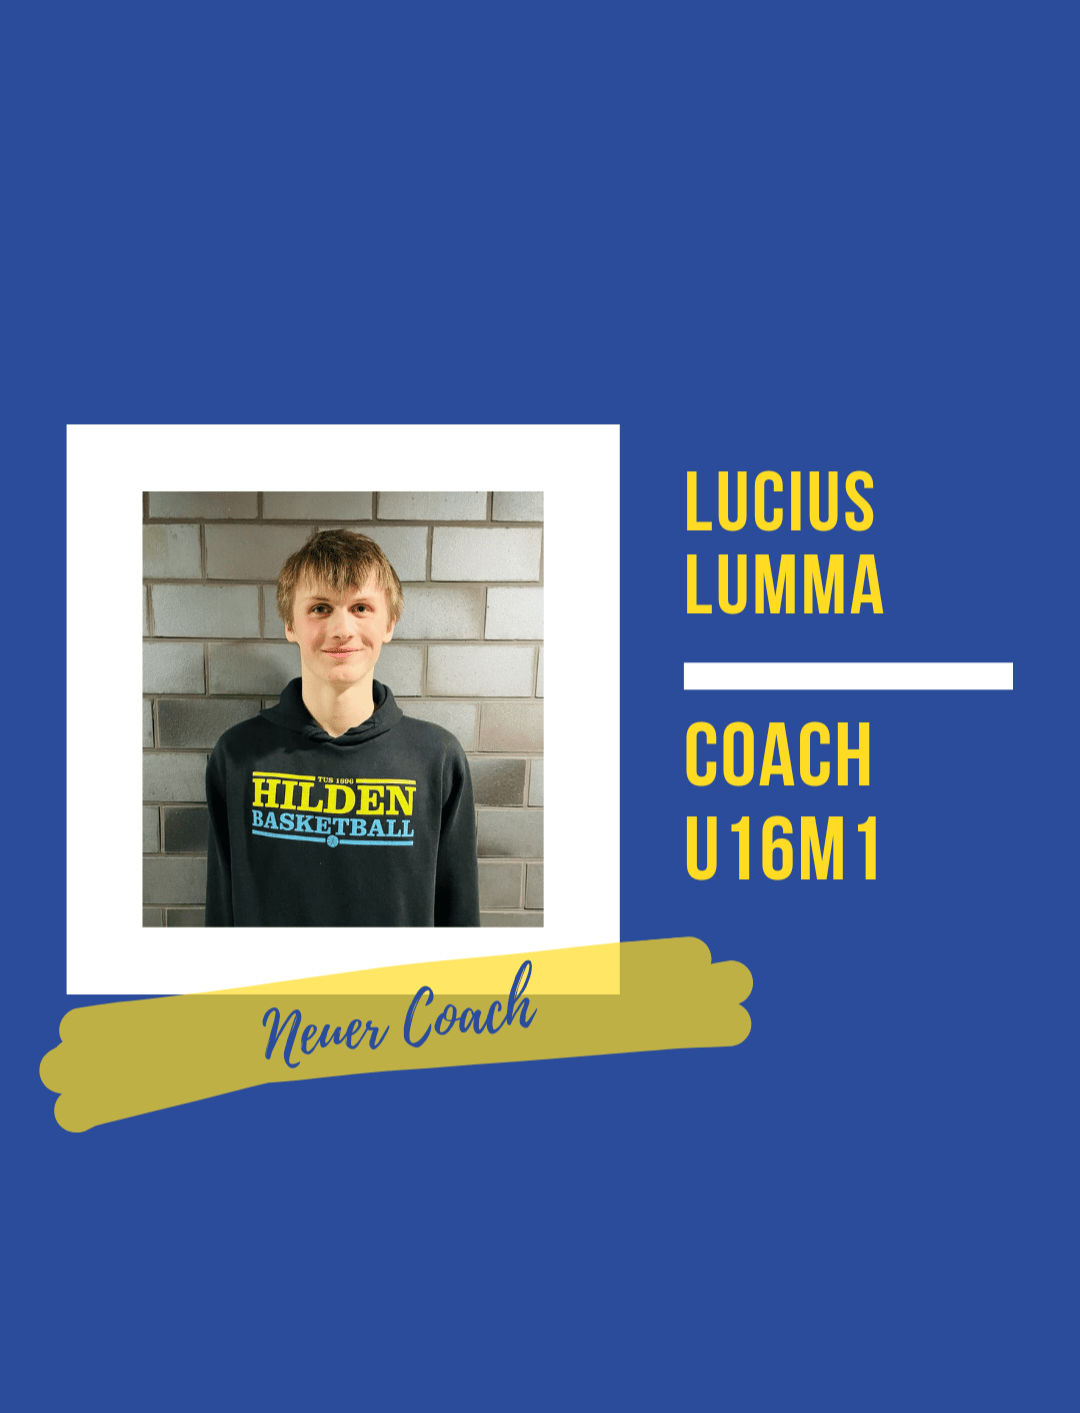 Neuer Coach der U16m1 Lucius Lumma